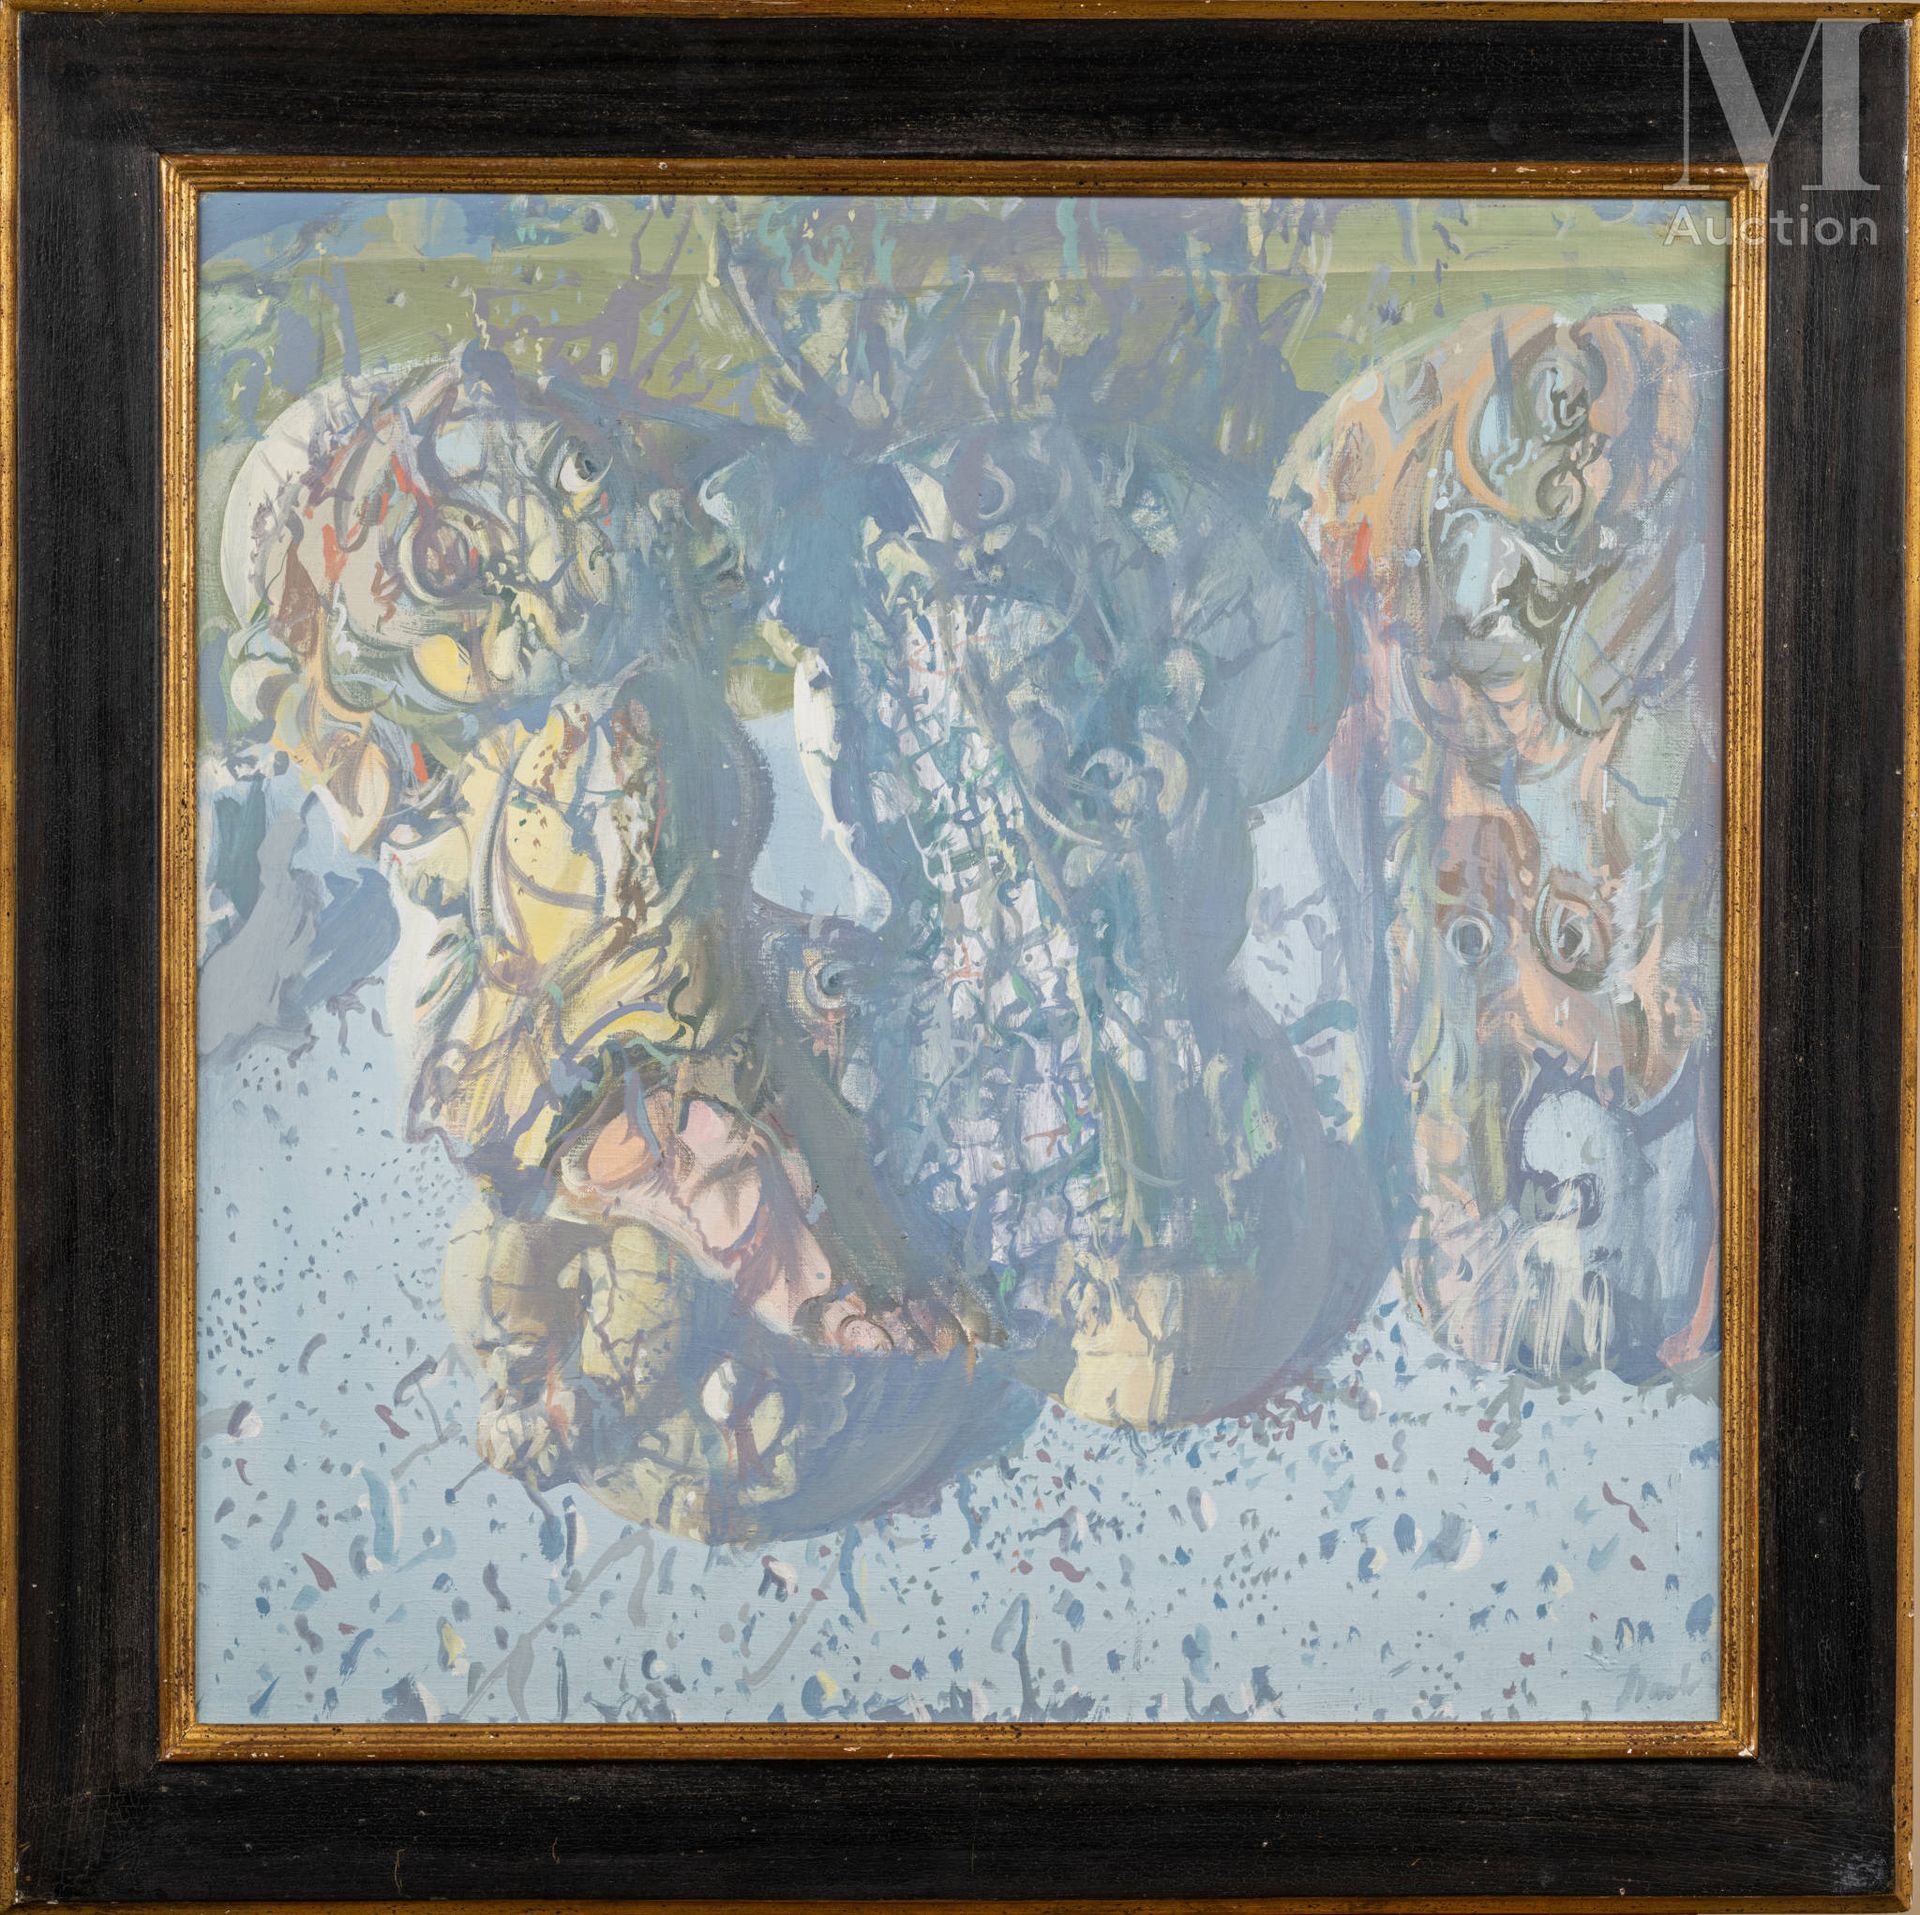 DADO (1933-2010) 祖先的画廊 XII, 1970年

布面油画，右下角有签名

60 x 60 cm



出处 :

Jeanne Buche&hellip;